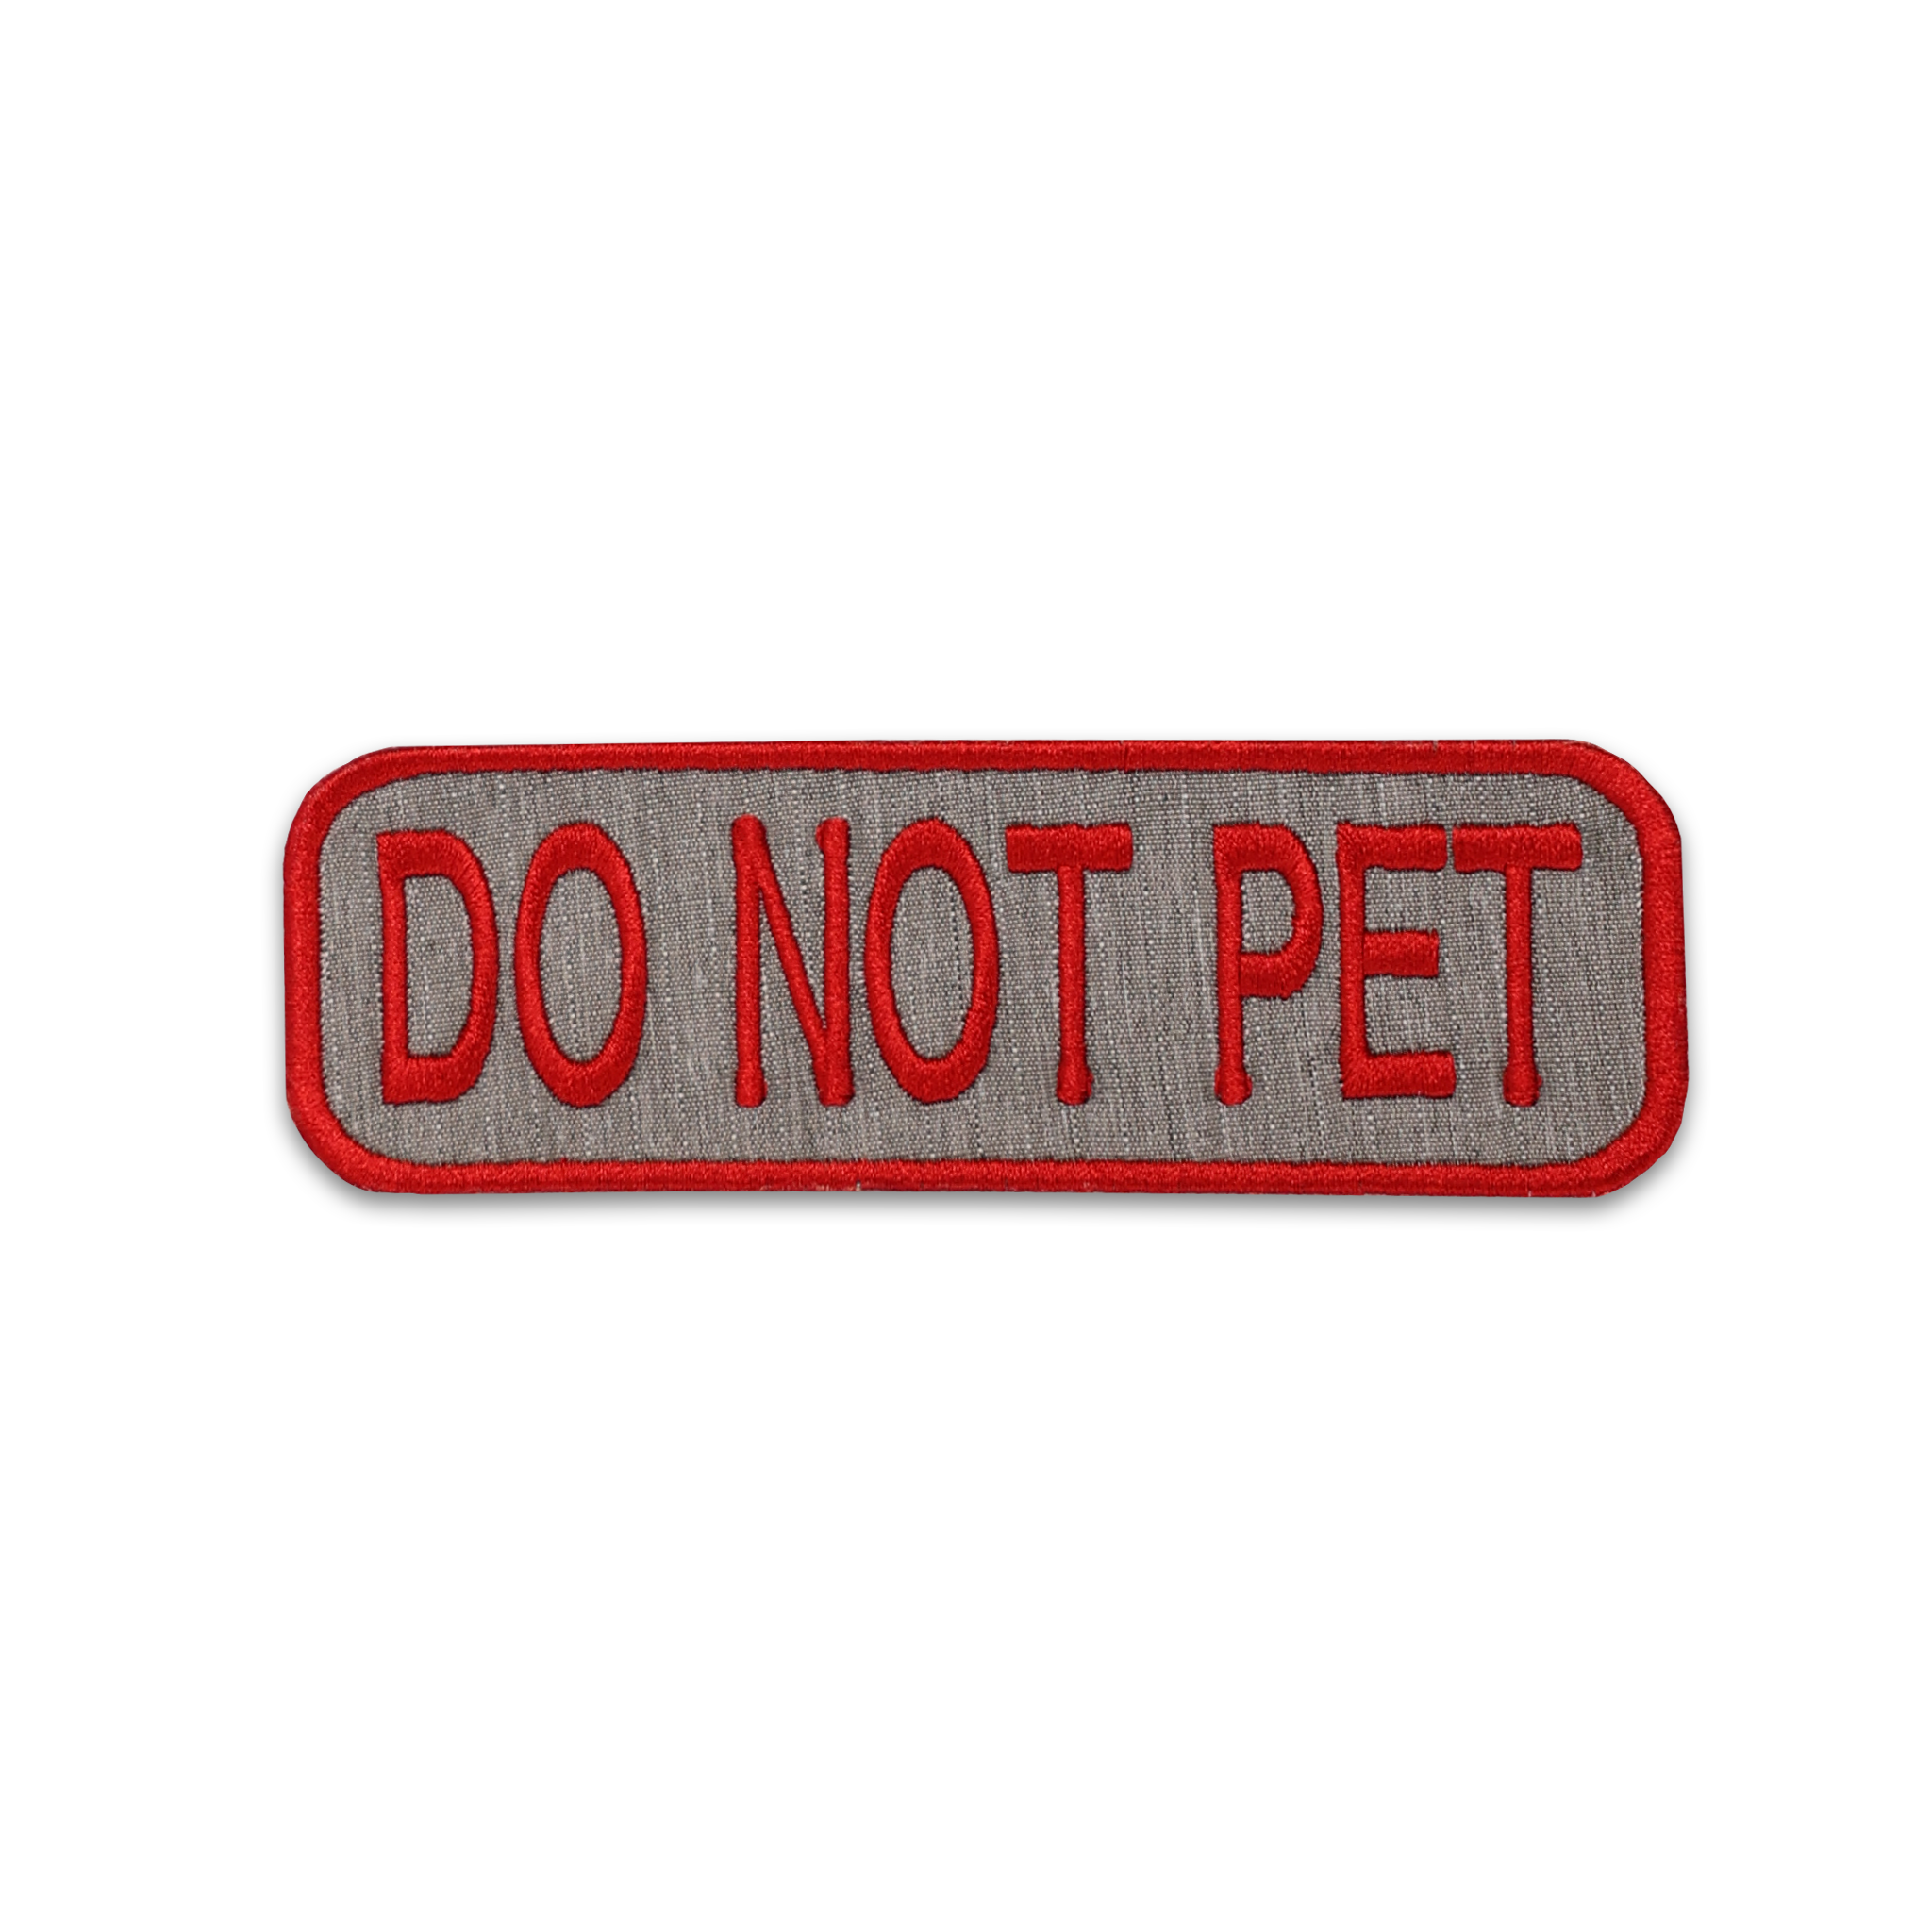 Do Not Pet Patch